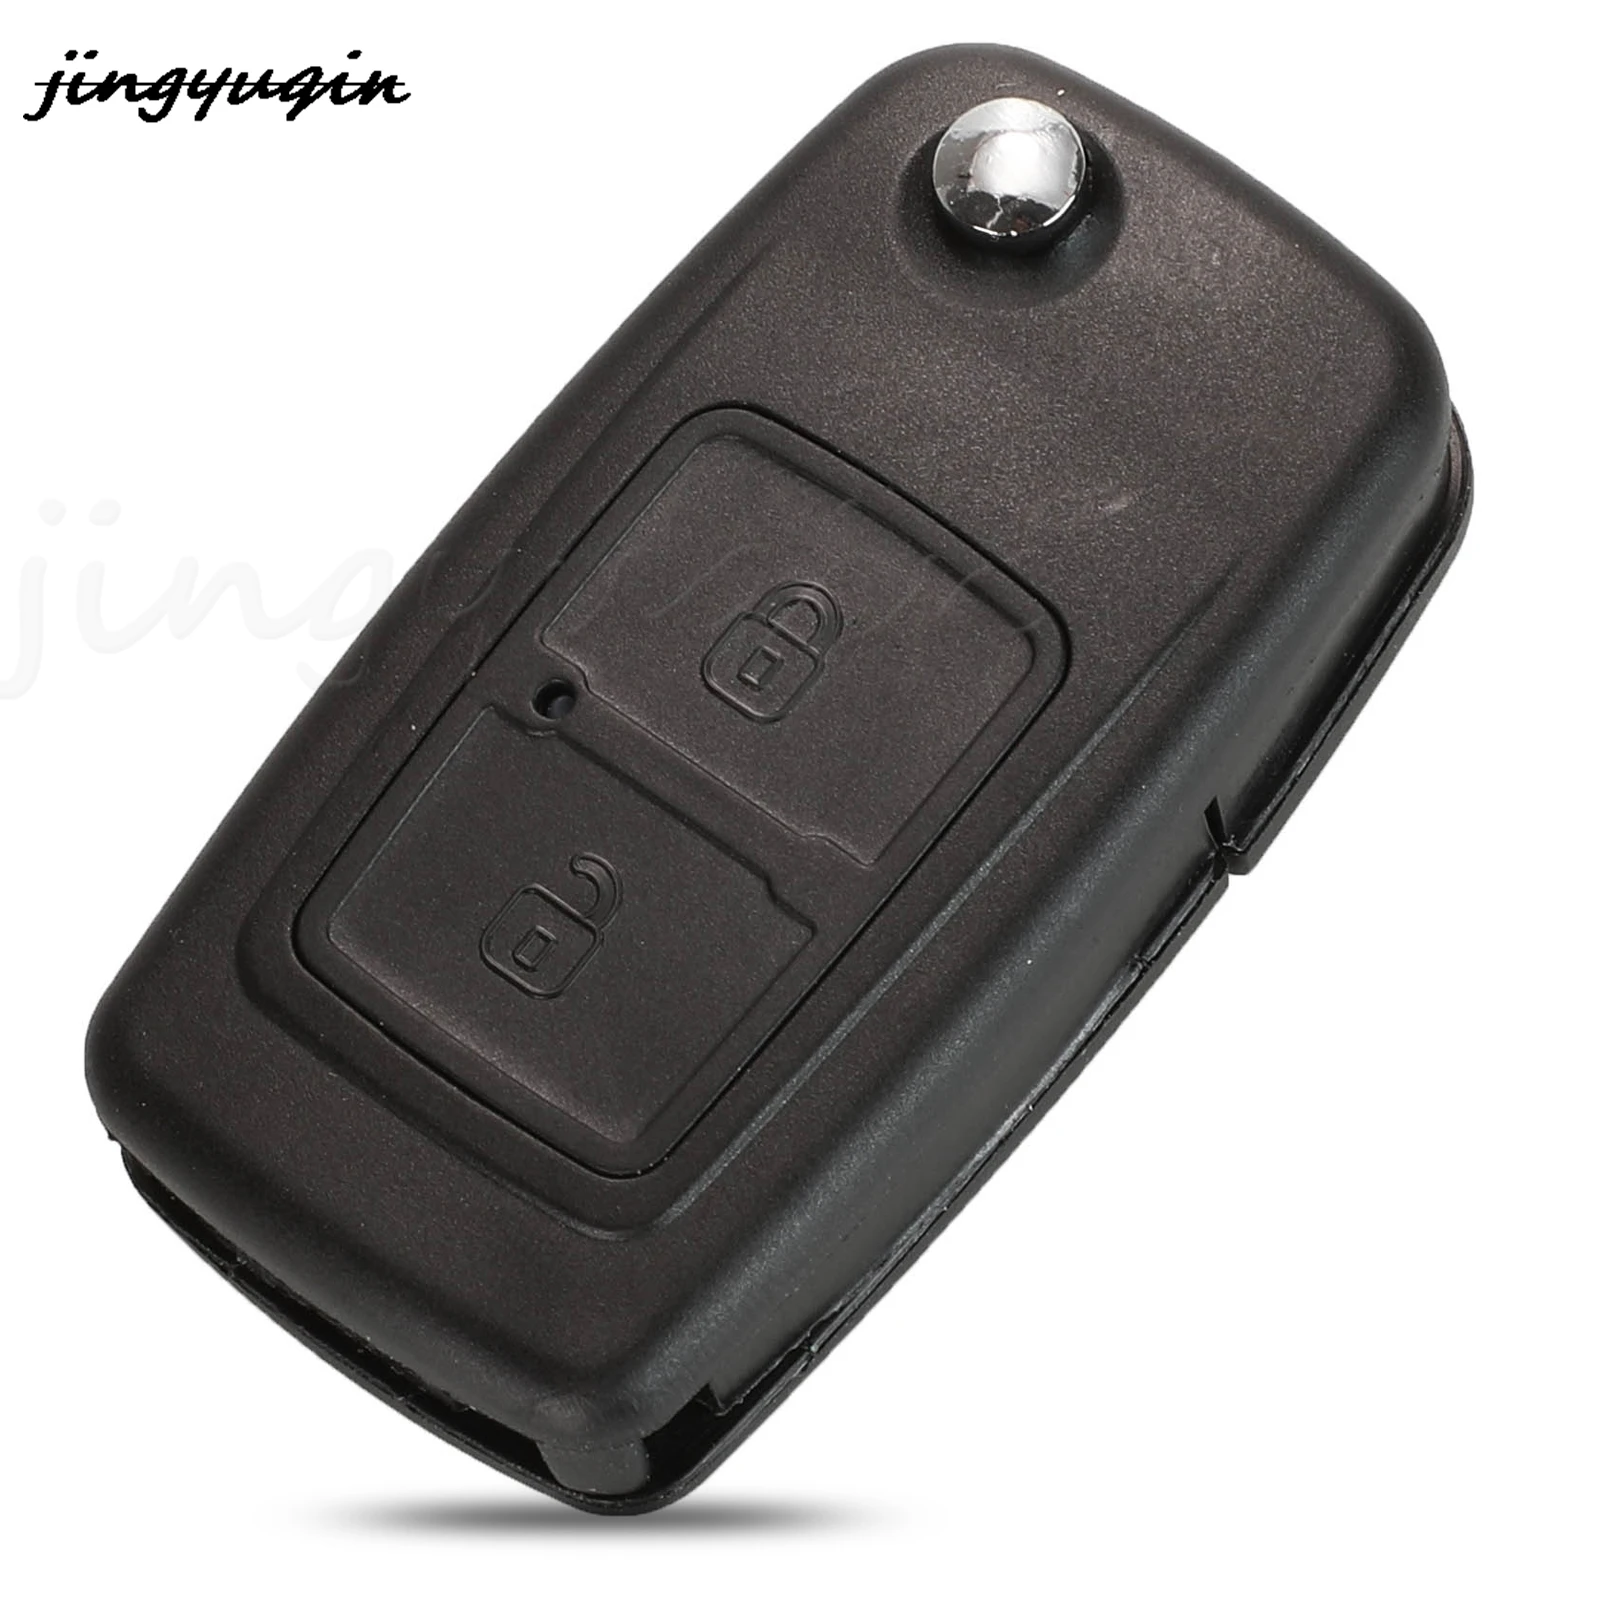 

jingyuqin 10pcs/lot 2 Buttons Replacement Remote Car Key Shell Case Fob For Chery A5 Fulwin Tiggo E5 A1 Cowin T11 2009